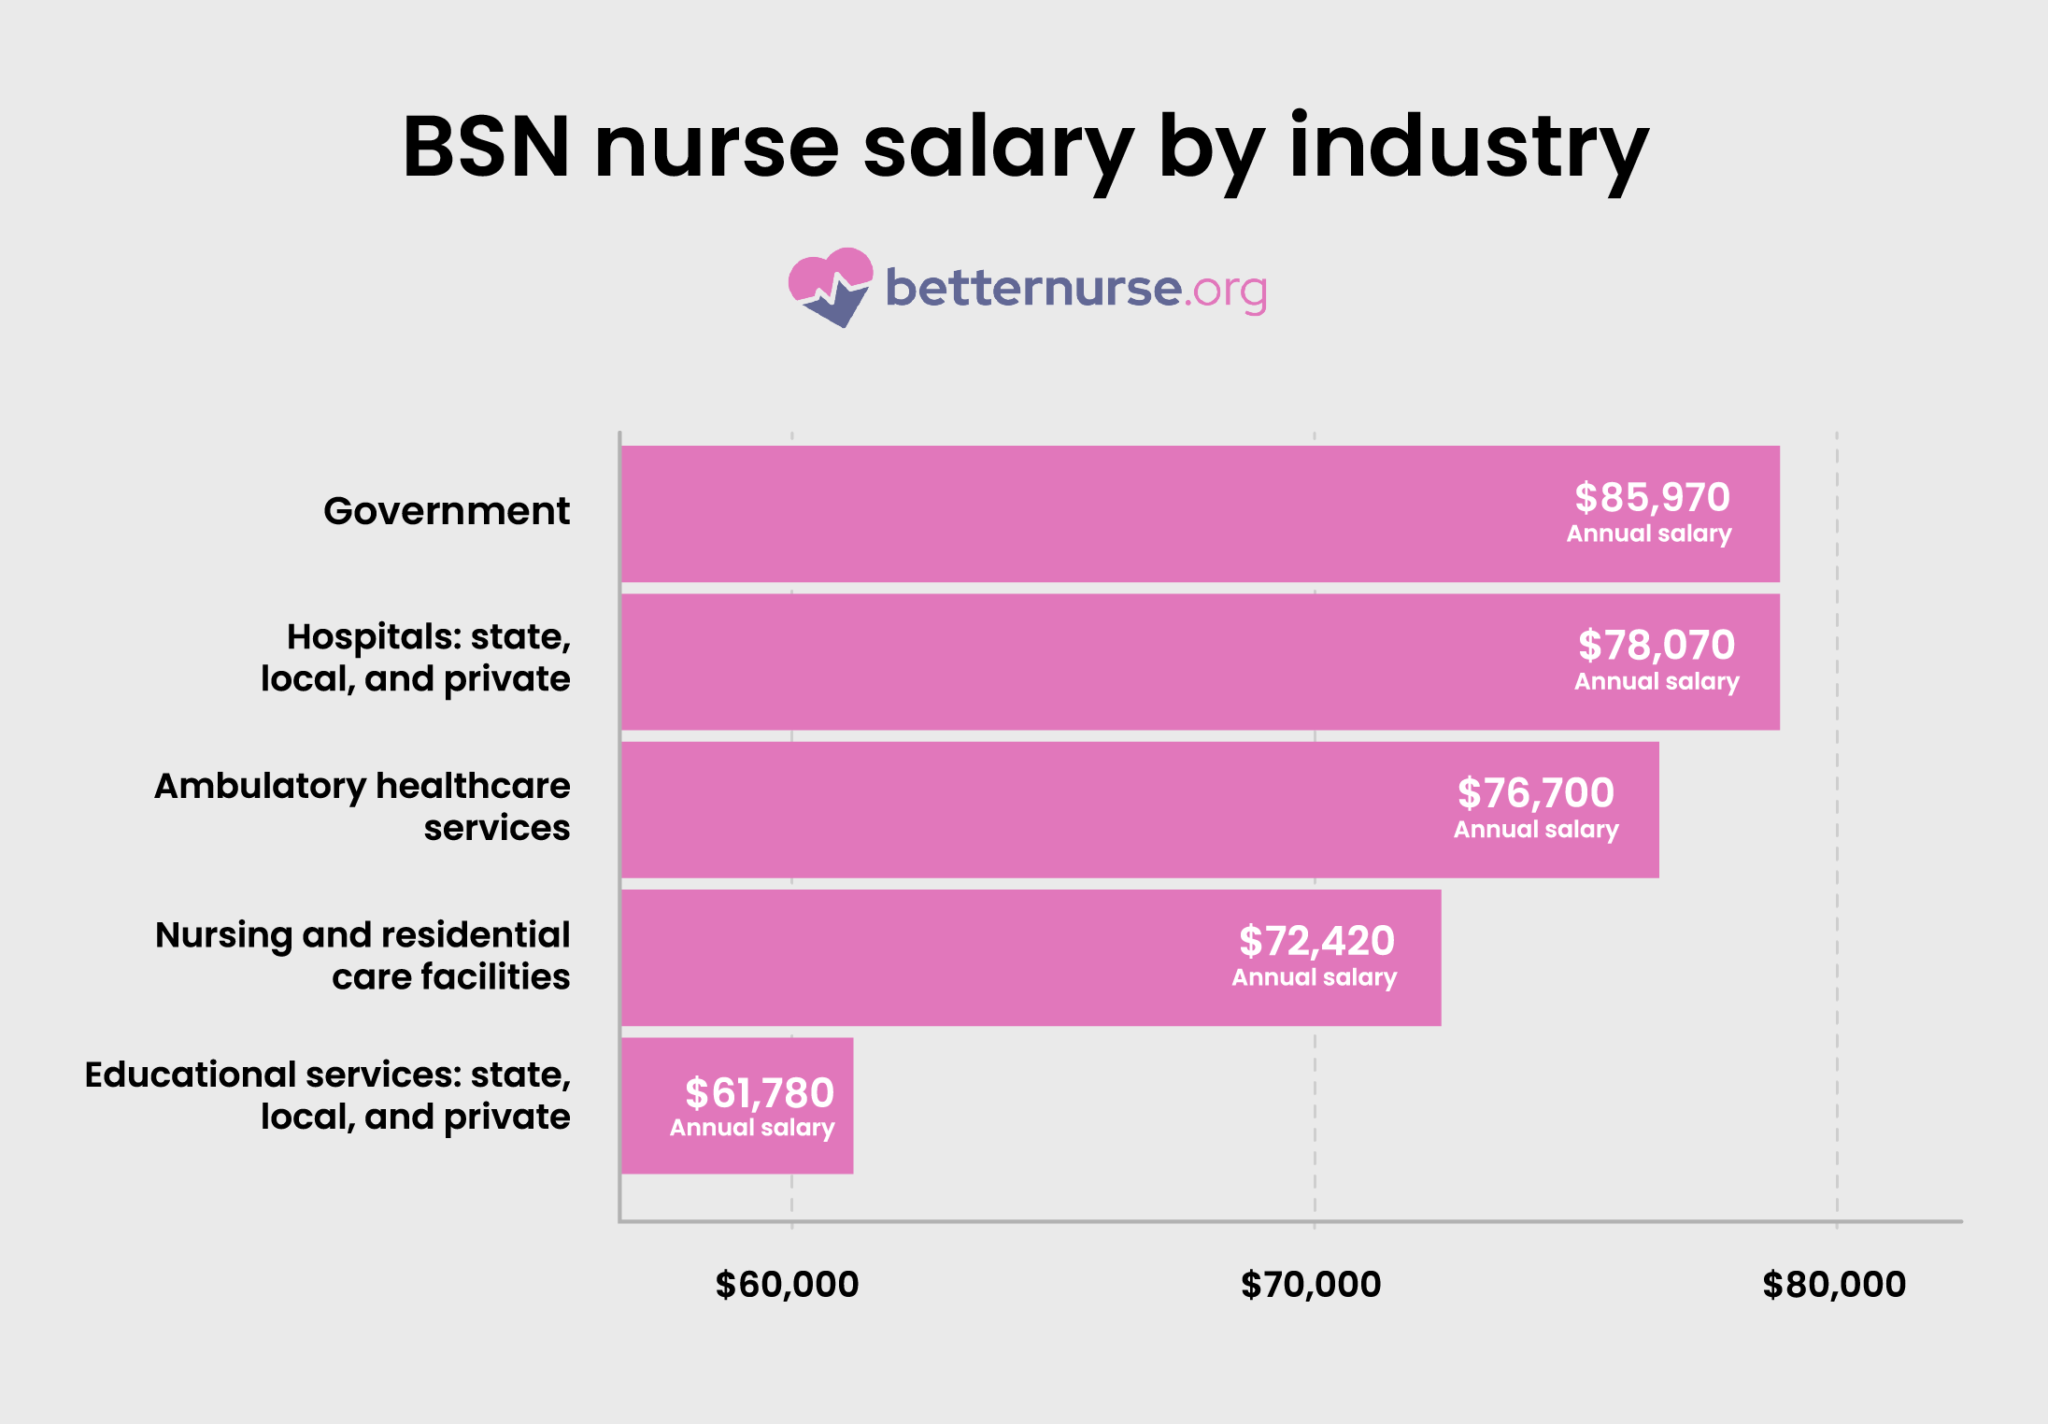 phd nurse salary in uk